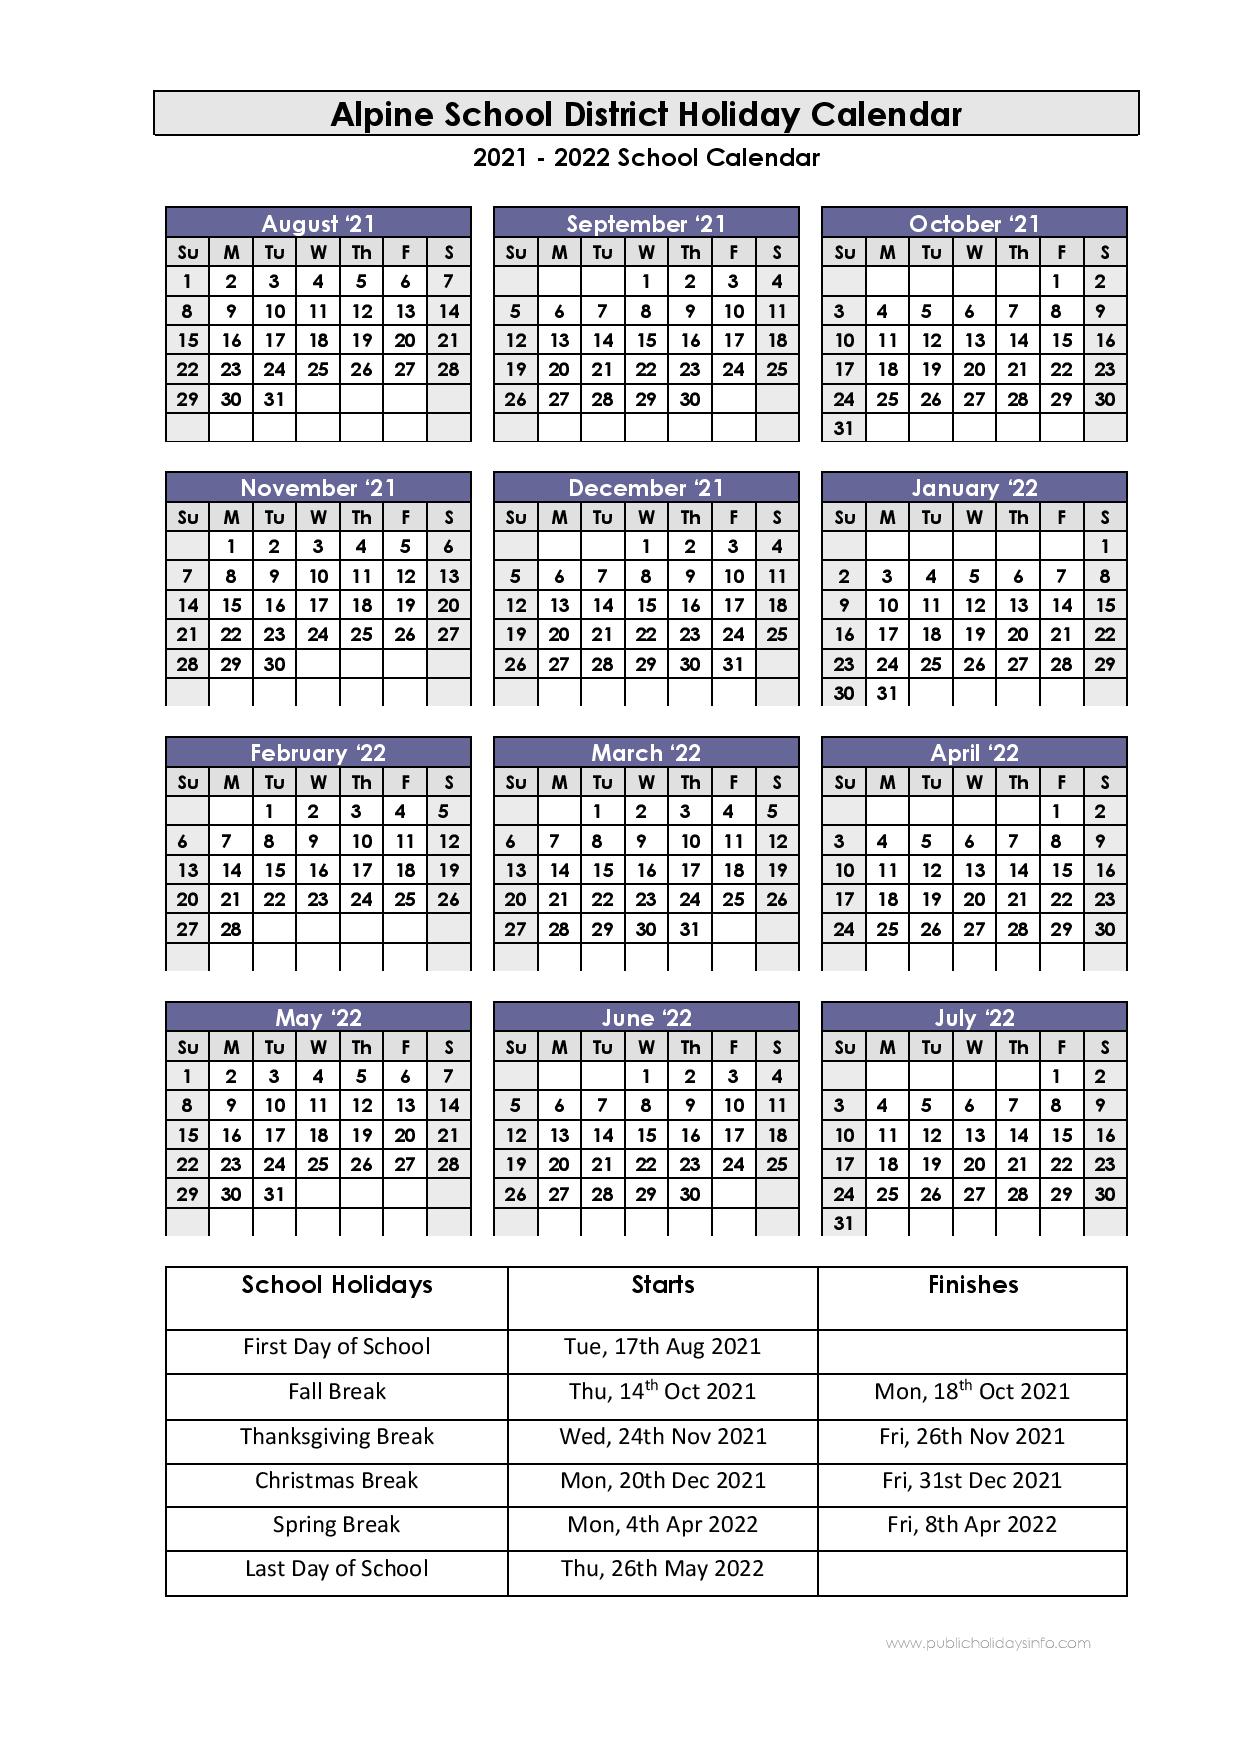 alpine-school-district-calendar-2021-2022